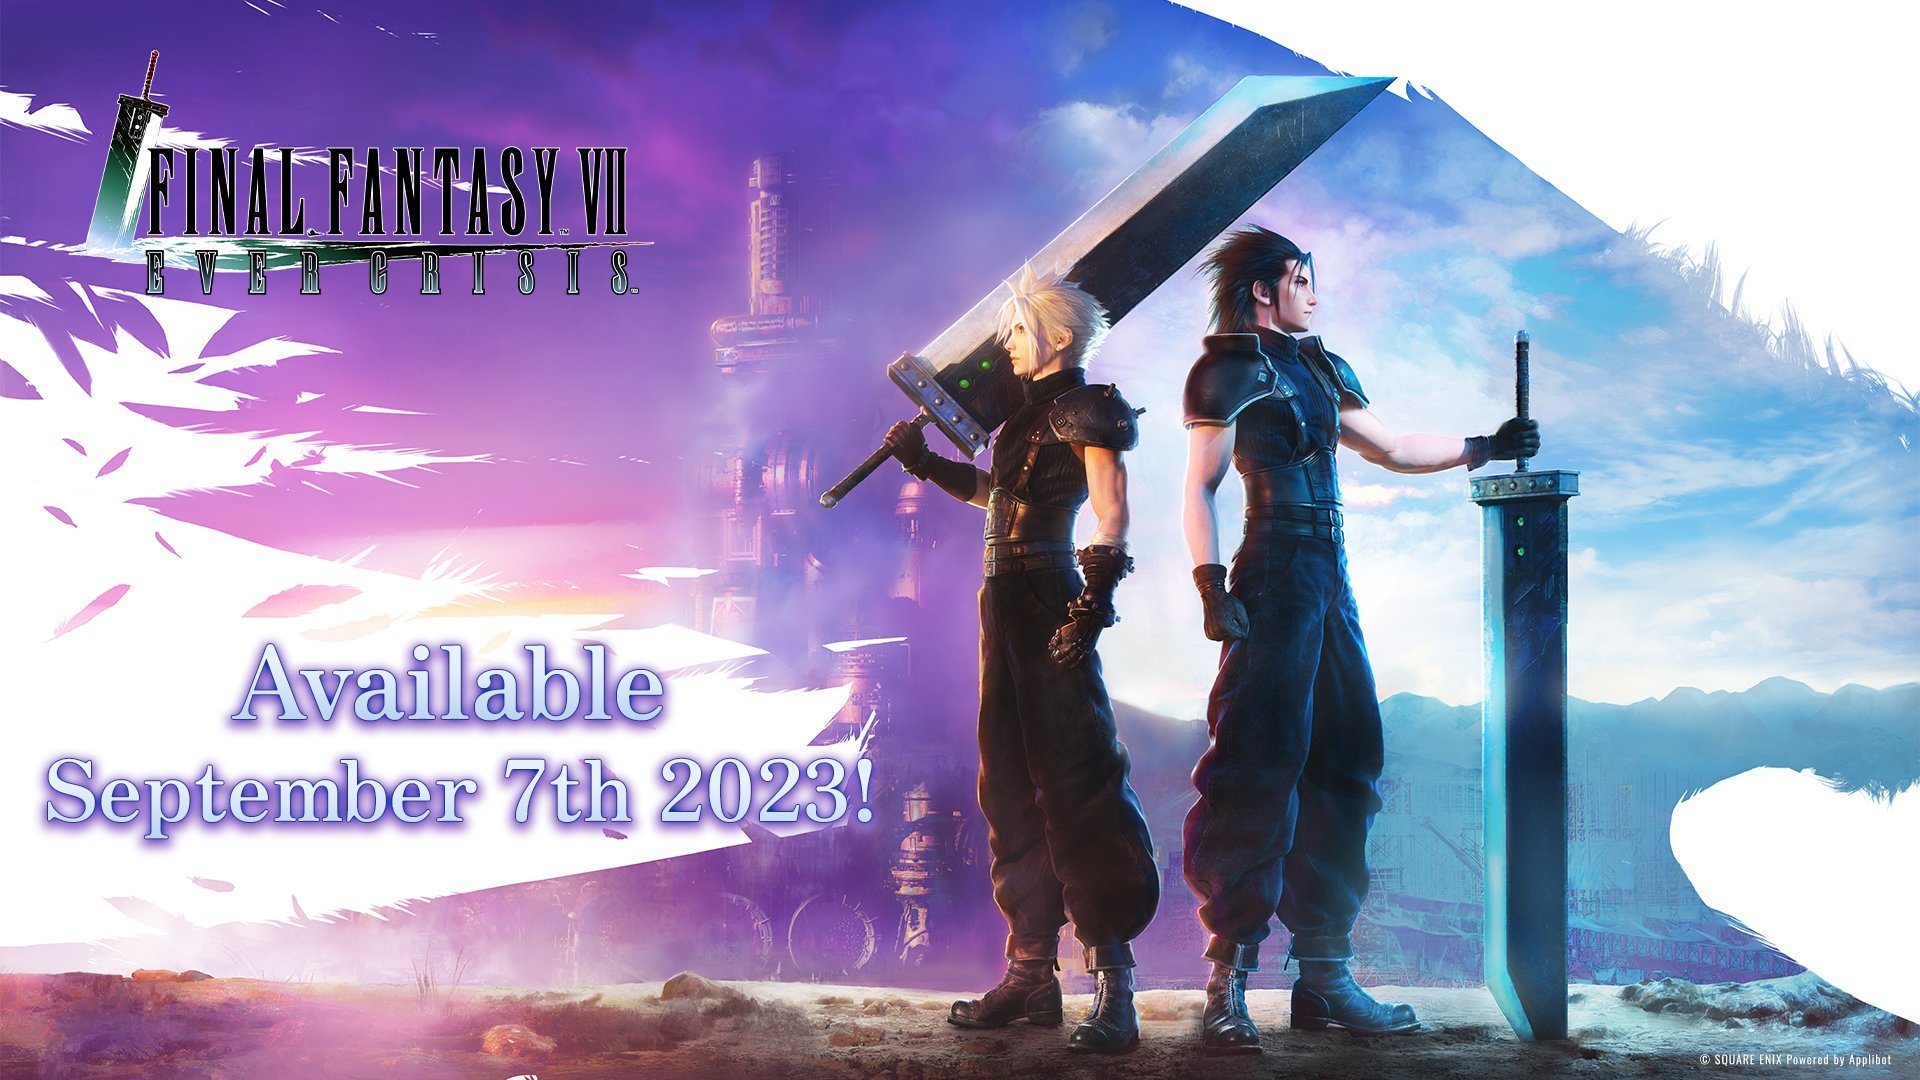 Final Fantasy VII: Ever Crisis launches September 7 - Gematsu